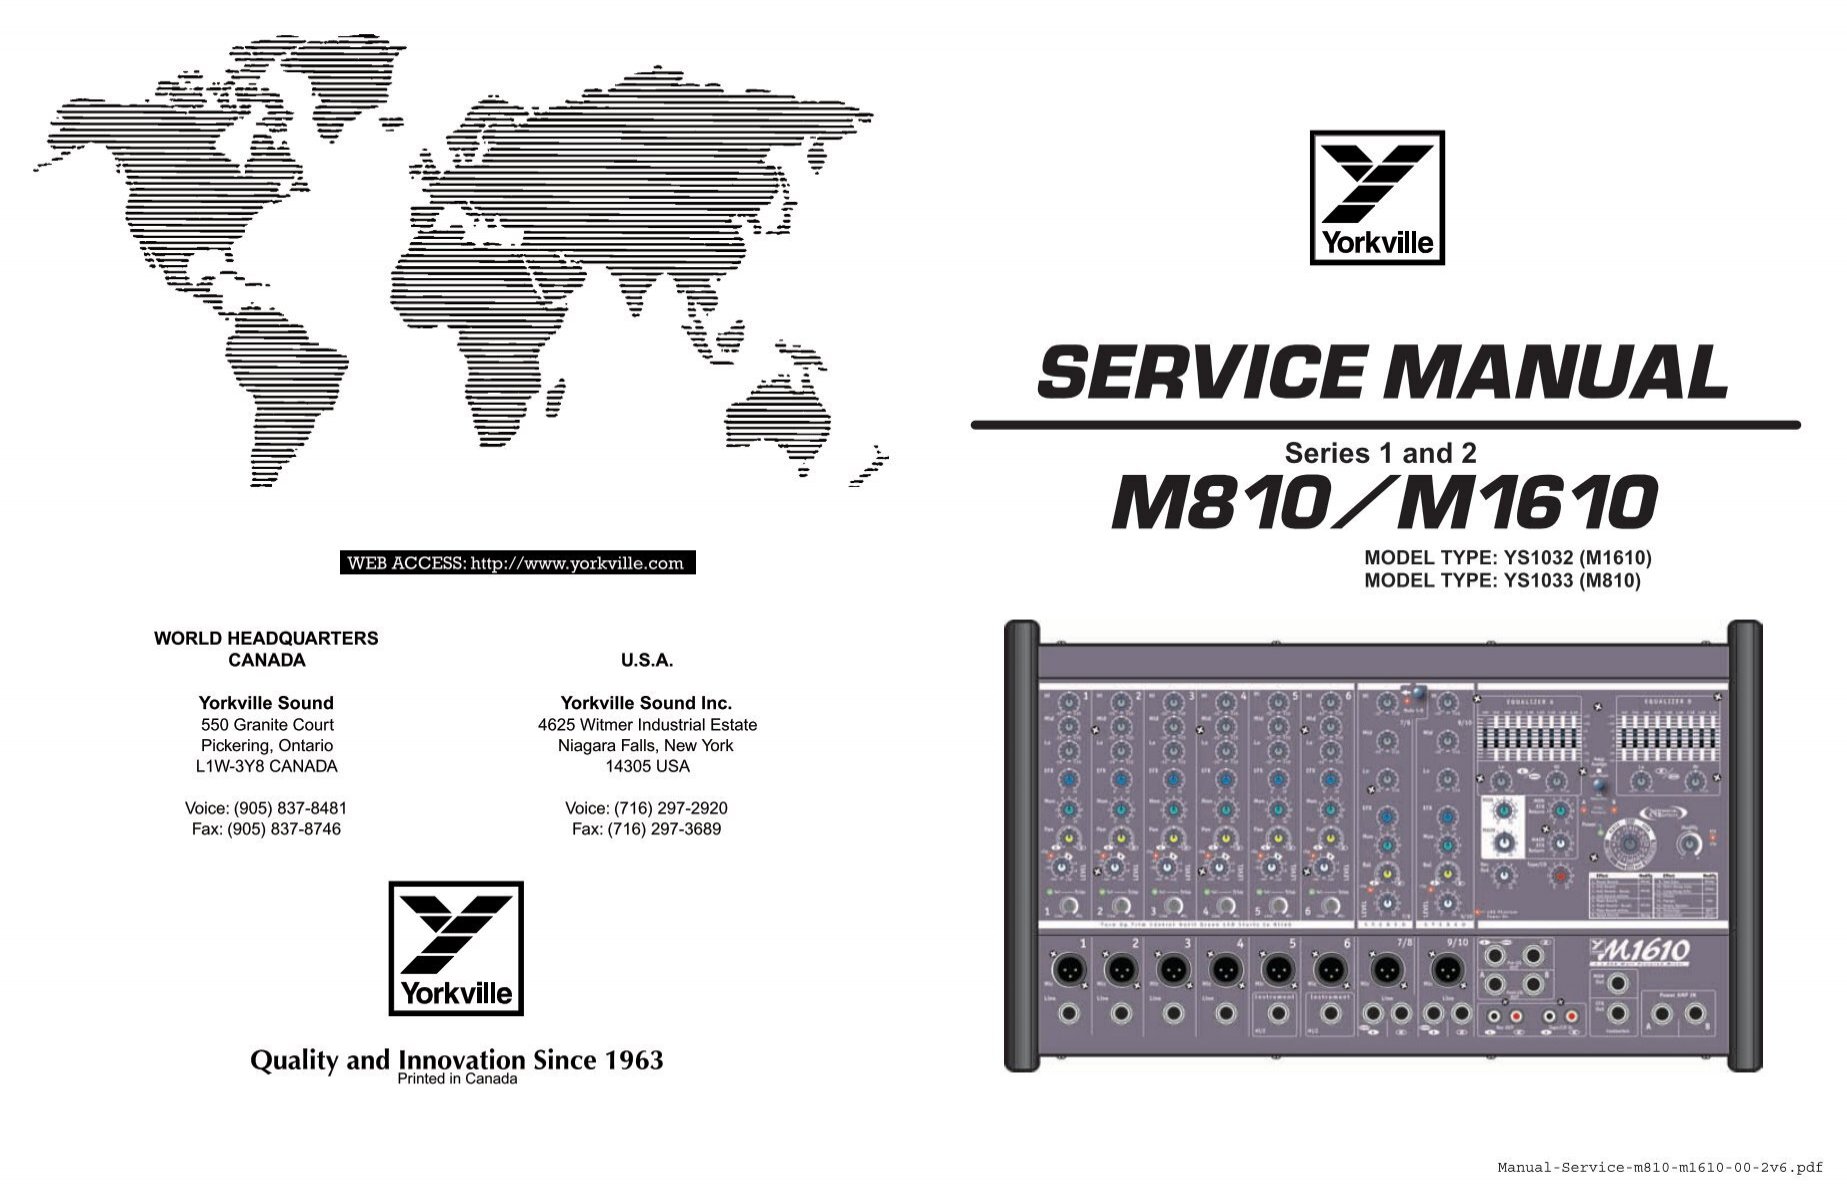 SERVICE MANUAL M810/M1610 - Yorkville Sound